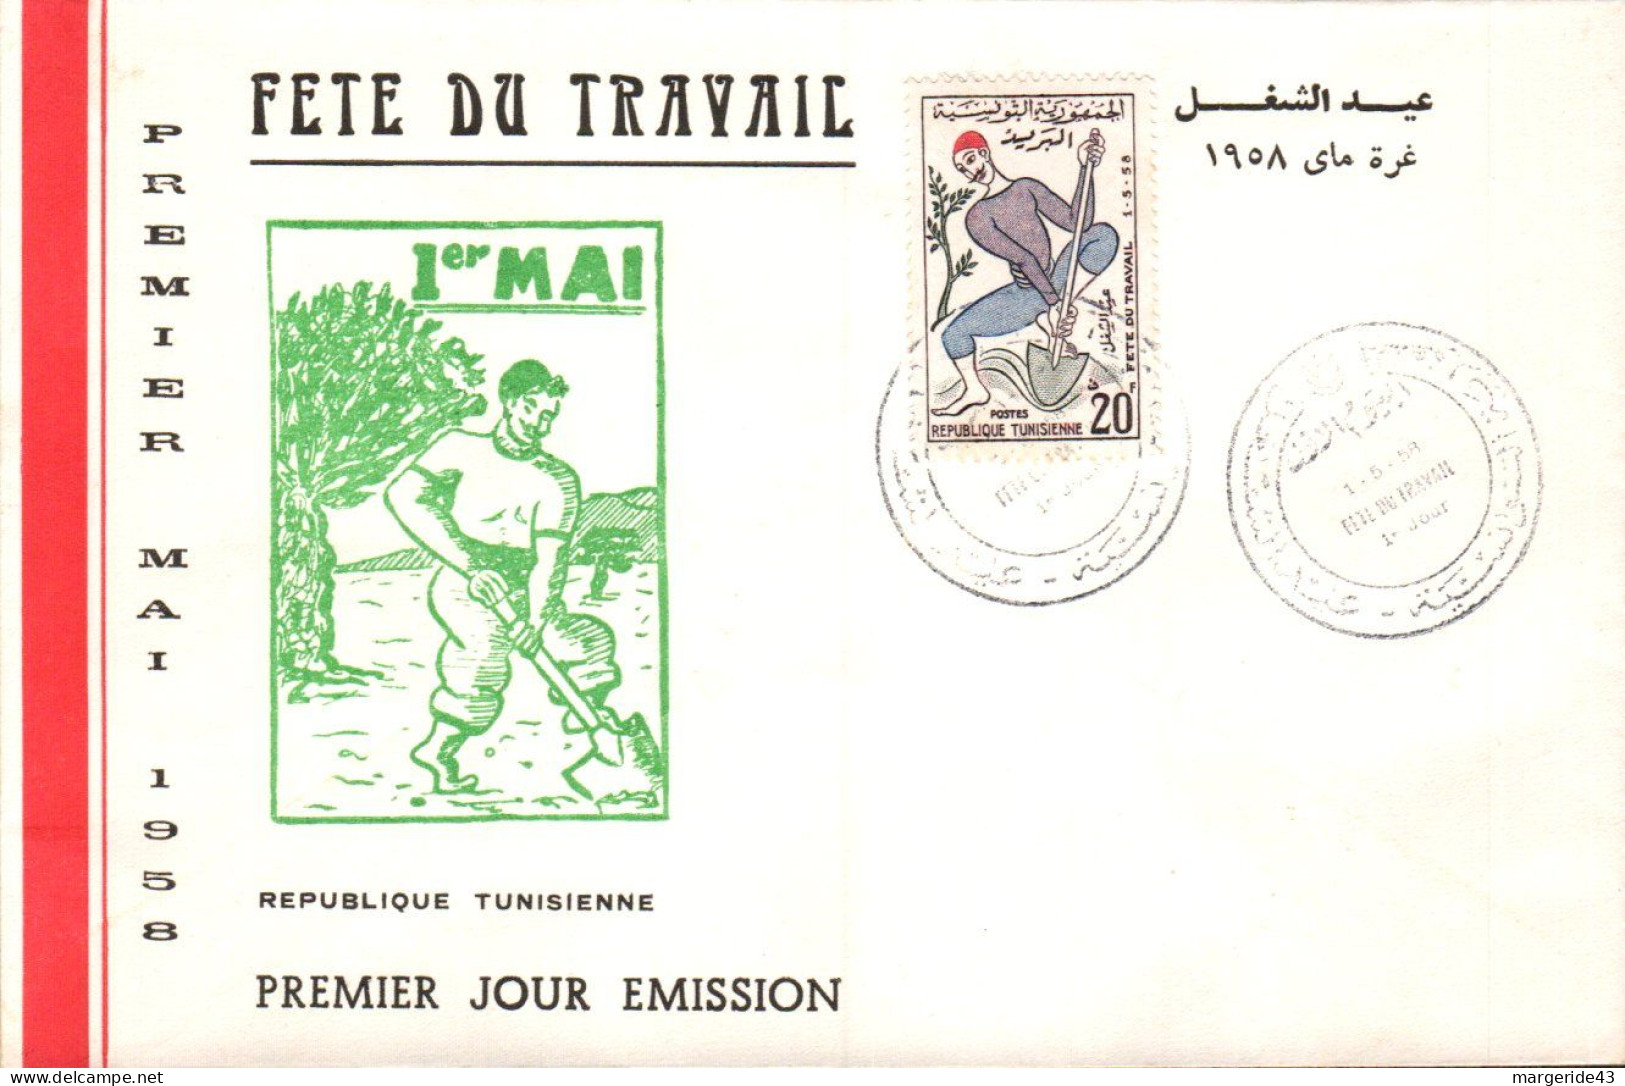 TUNISIE FDC 1958 FETE DU TRAVAIL - Tunisia